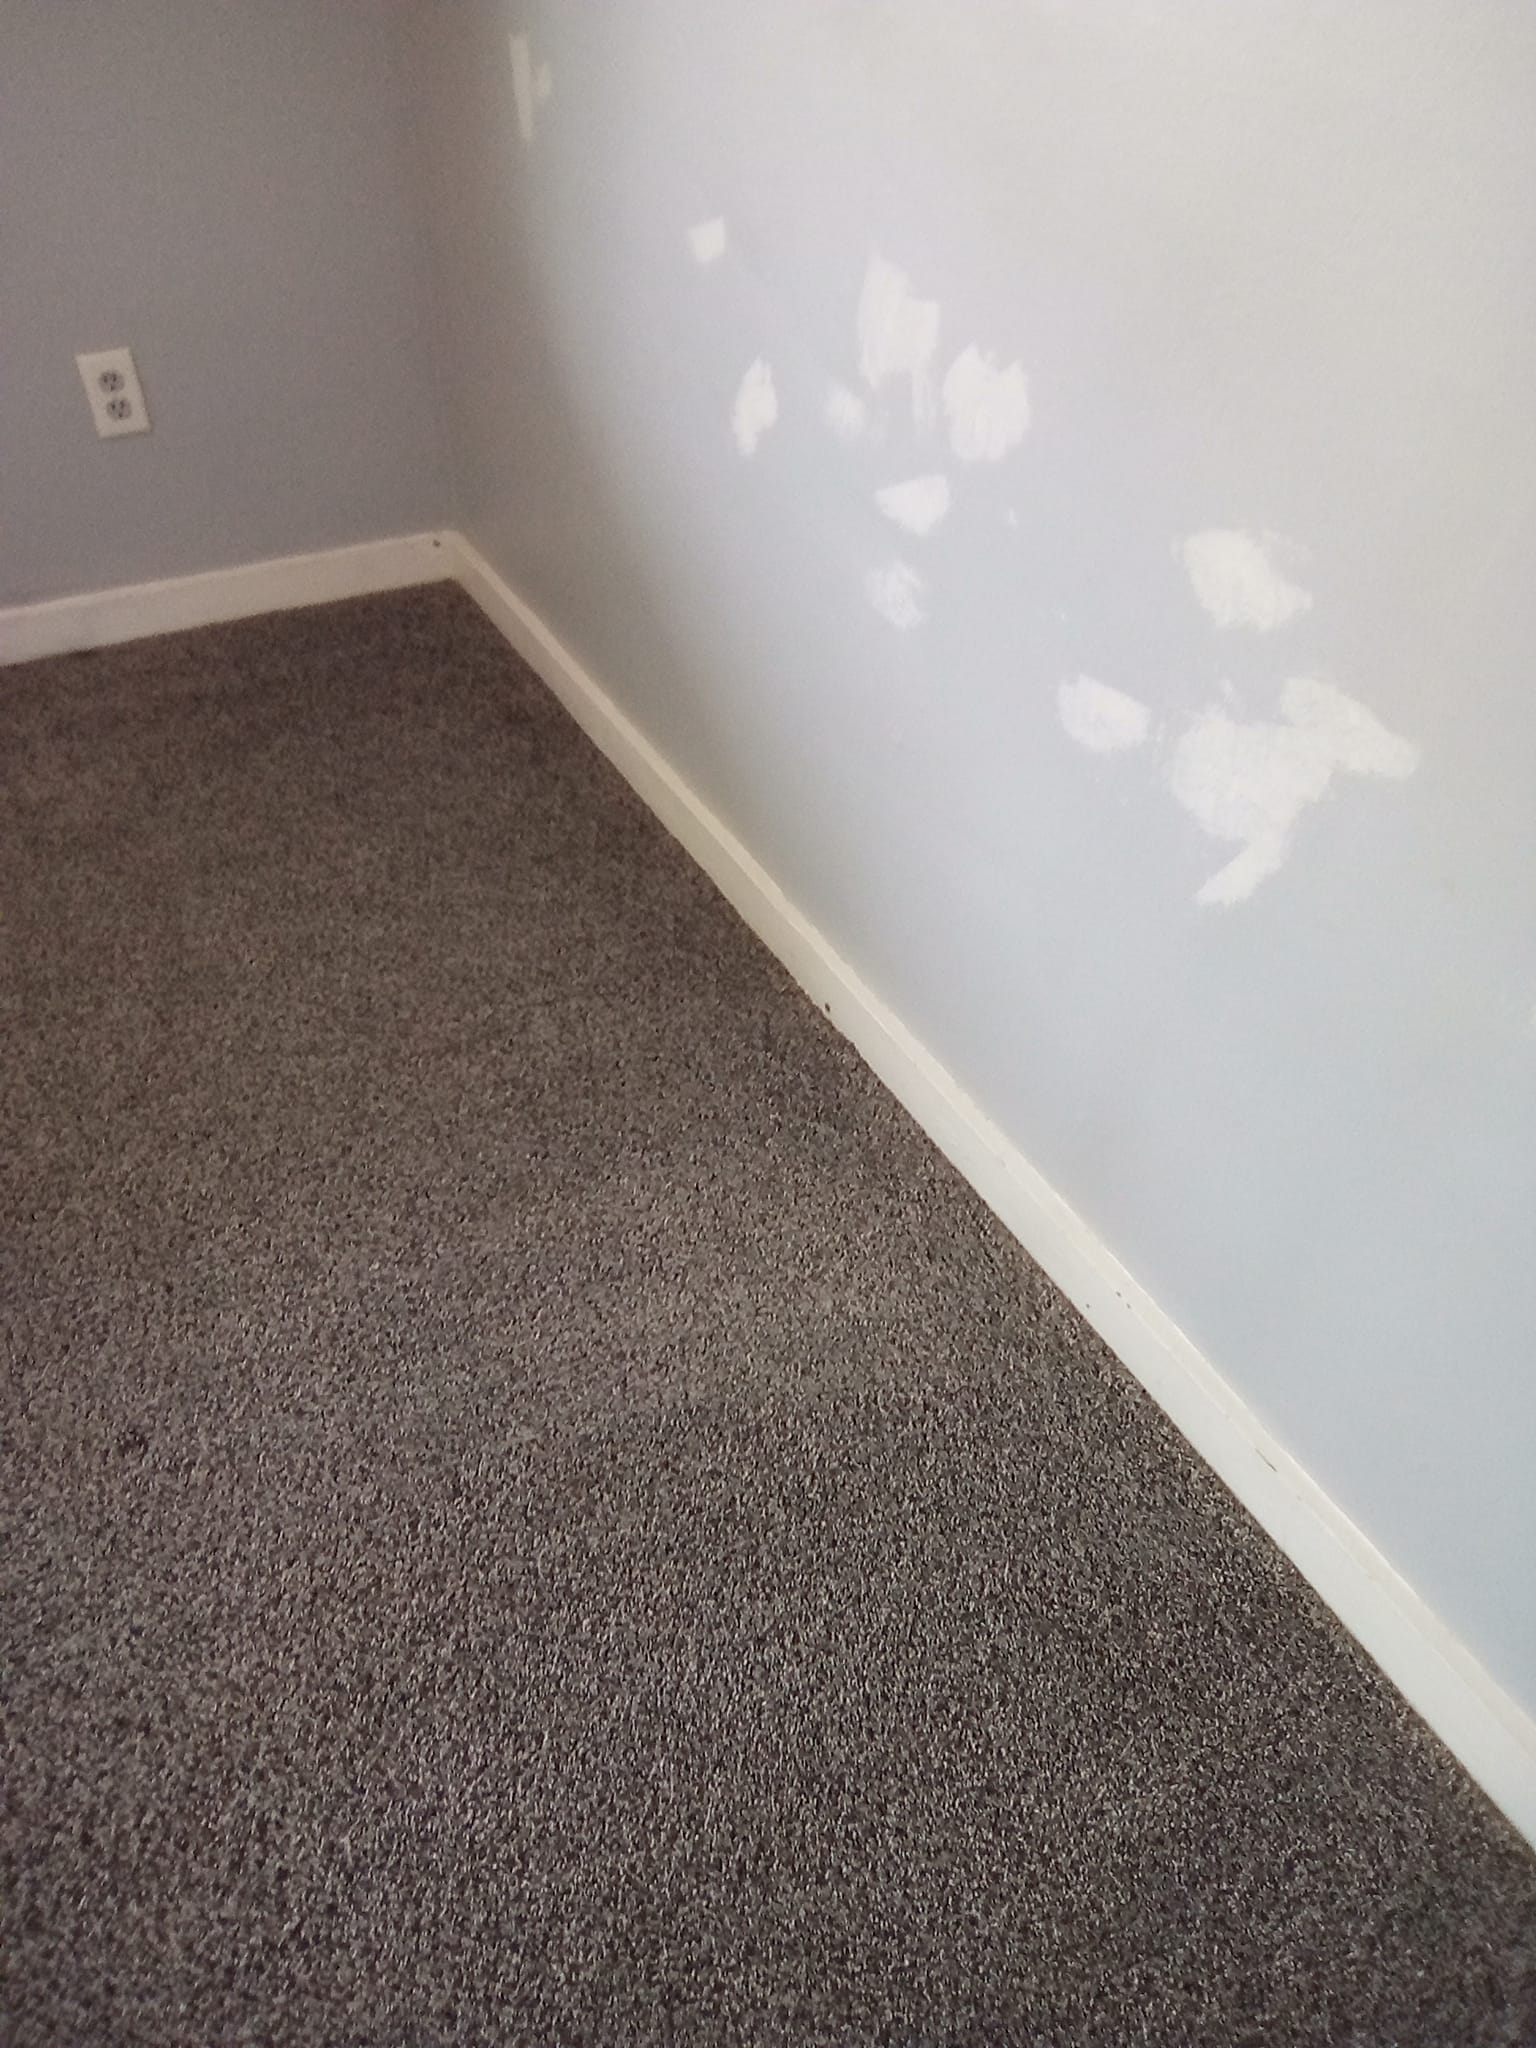 Magic Wand Carpet Cleaning, LLC 302 Woodland St, Cleveland Wisconsin 53015